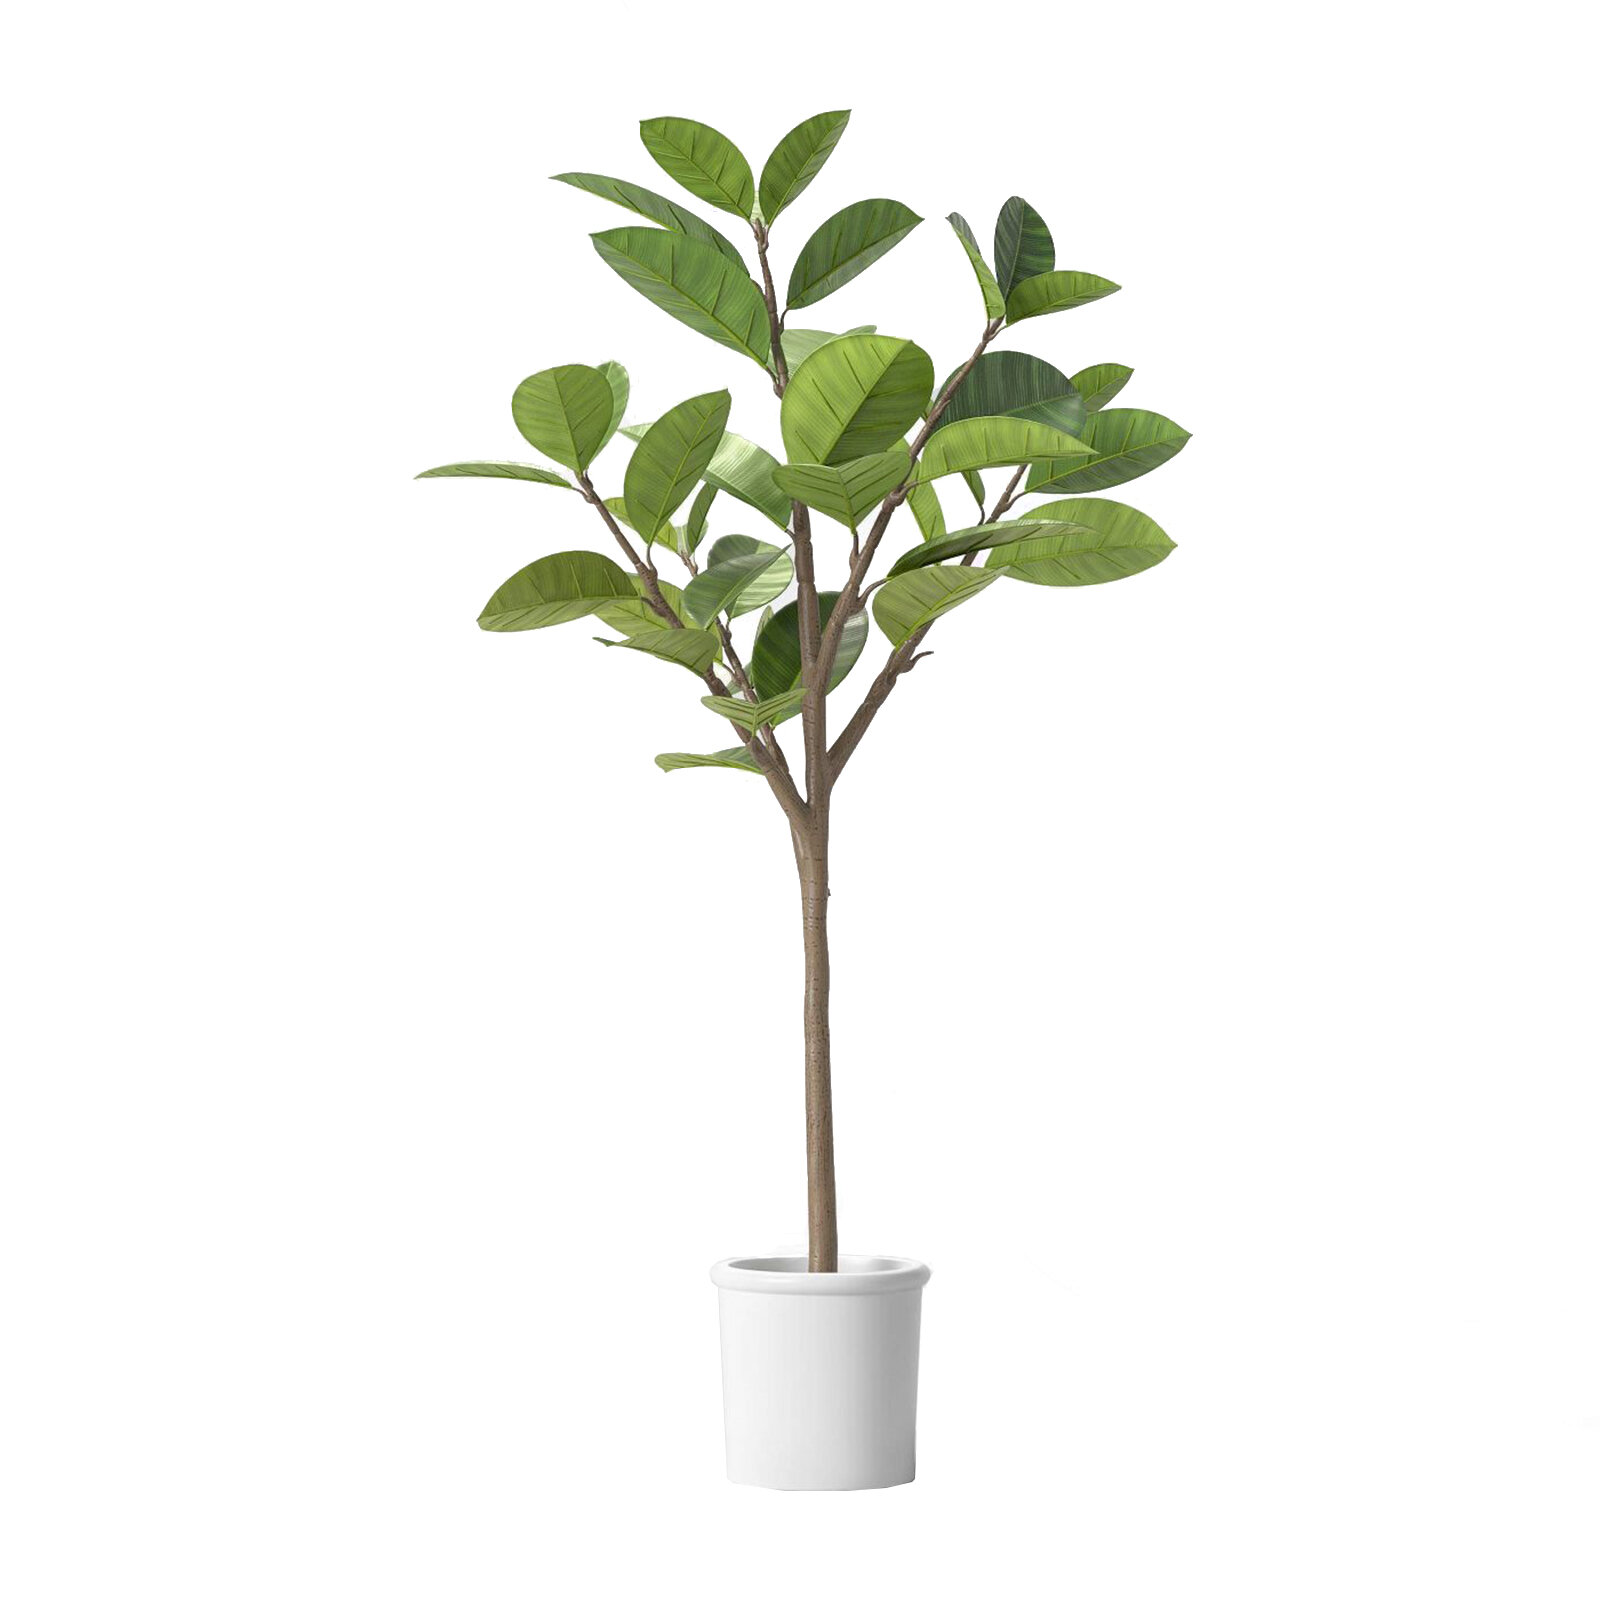 Artificial Tree in Pot, Target, $131